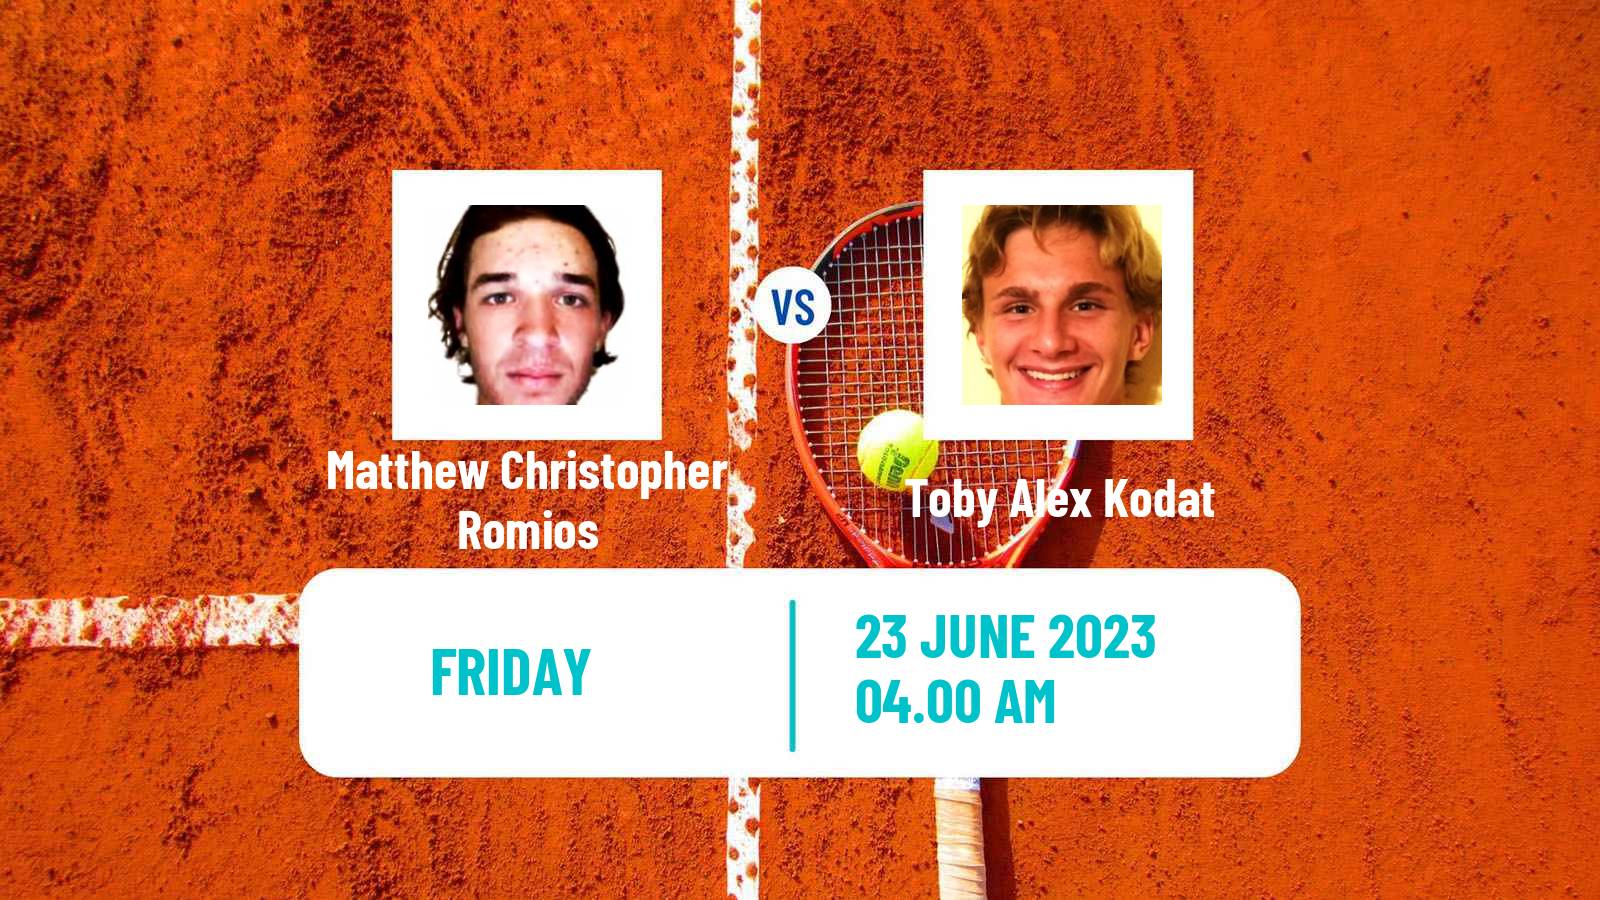 Tennis ITF M25 Poprad Men Matthew Christopher Romios - Toby Alex Kodat